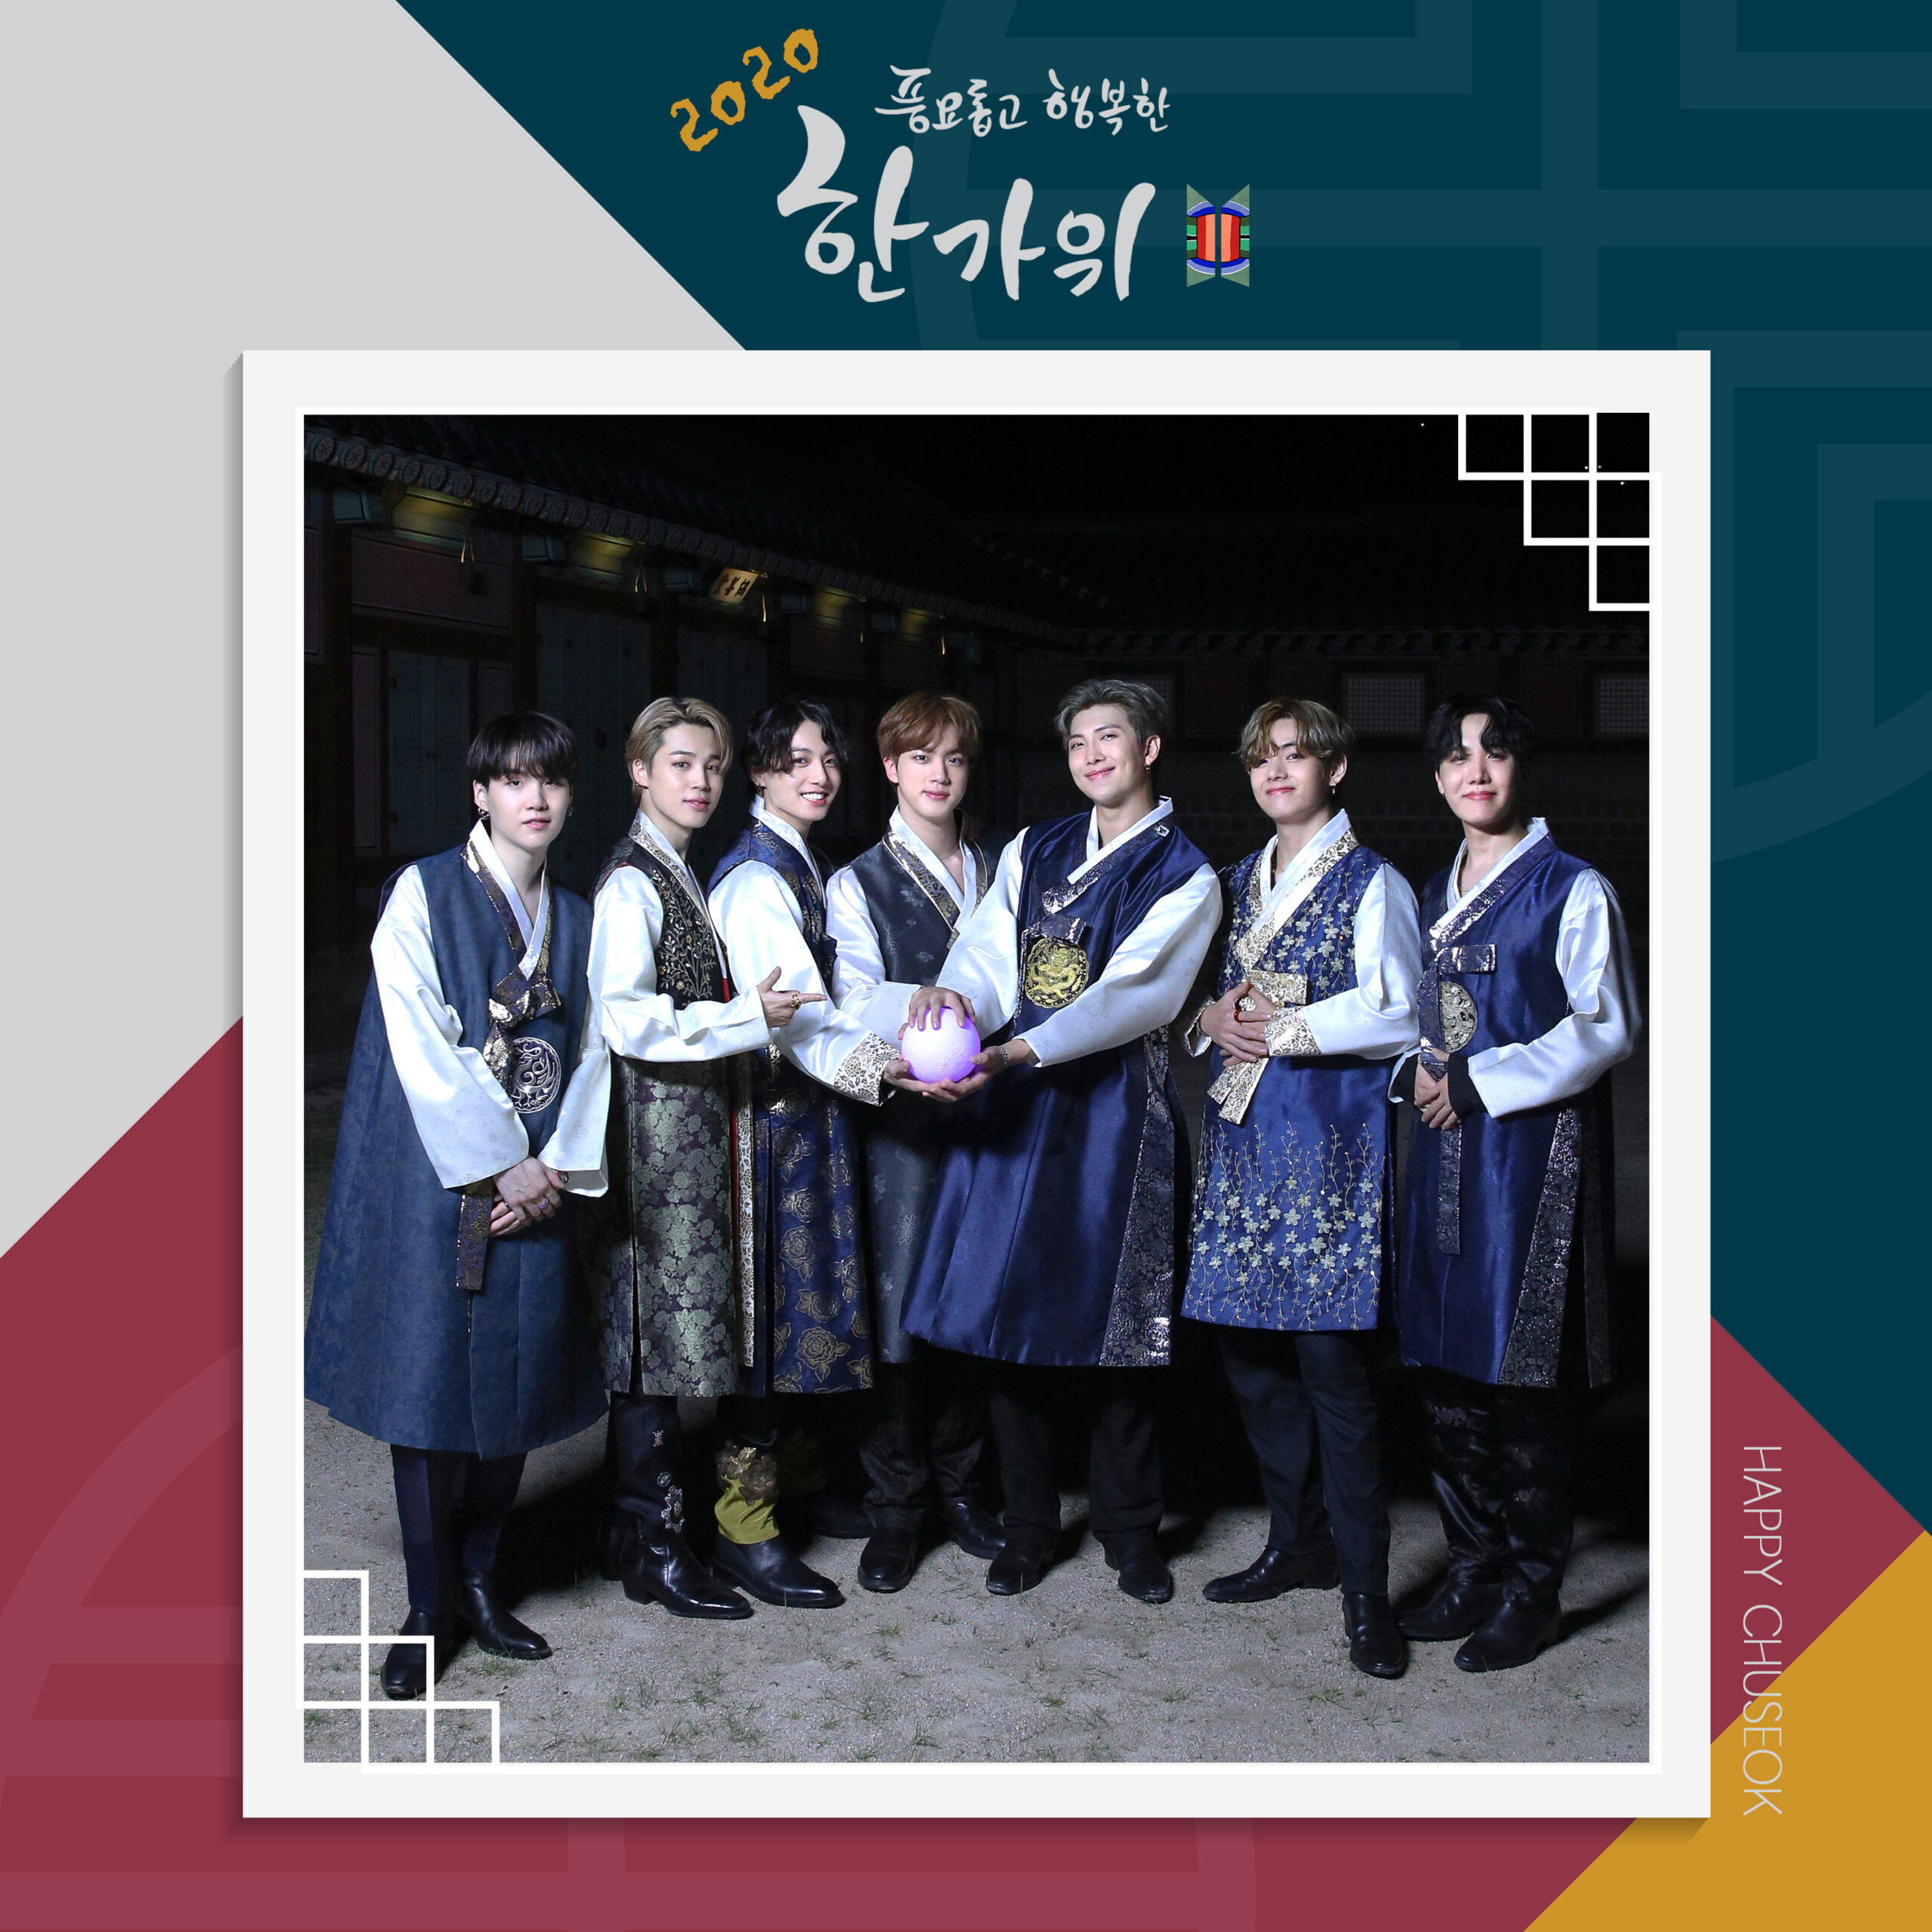 happy-chuseok-a-photo-collection-of-k-pop-idols-celebrating-korean-big-holiday-3